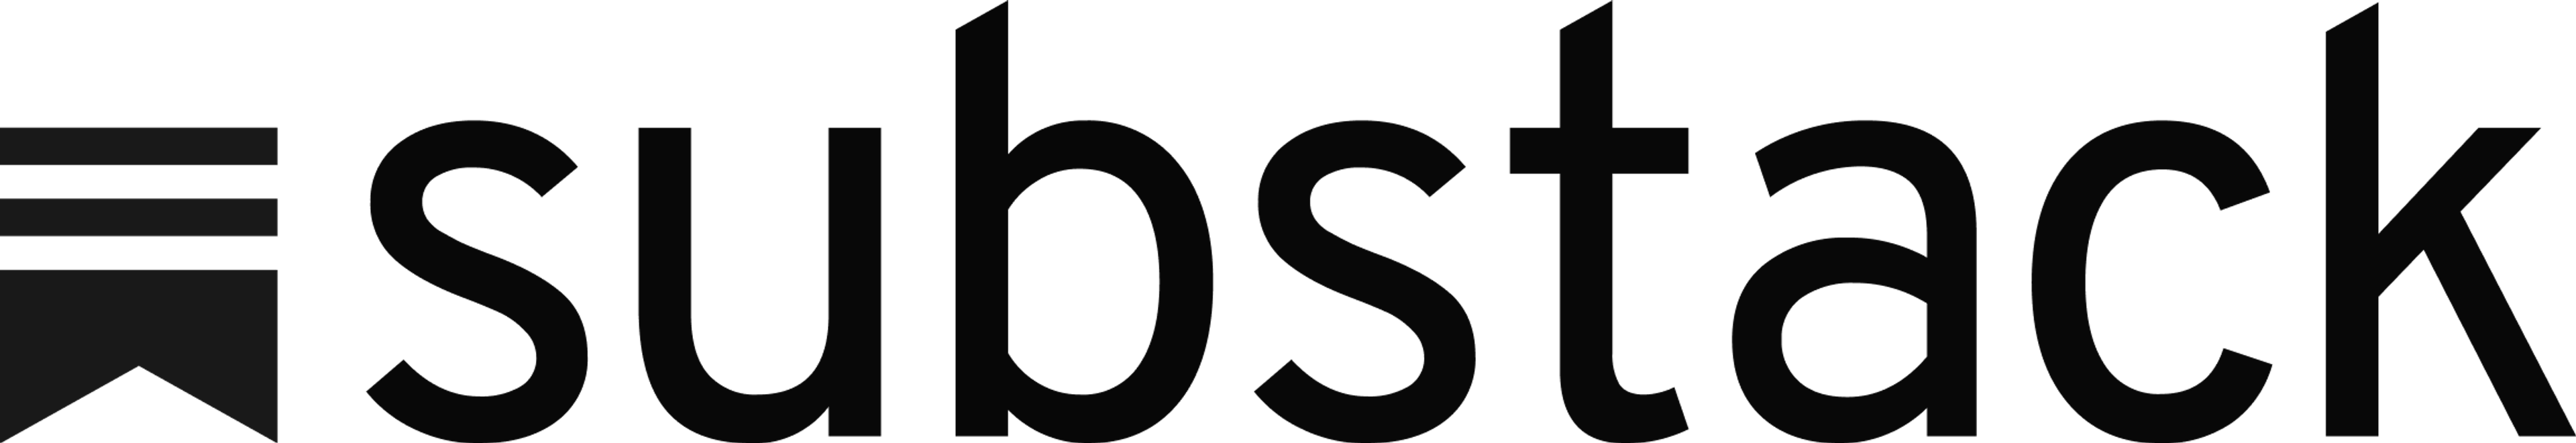 Substack Logo